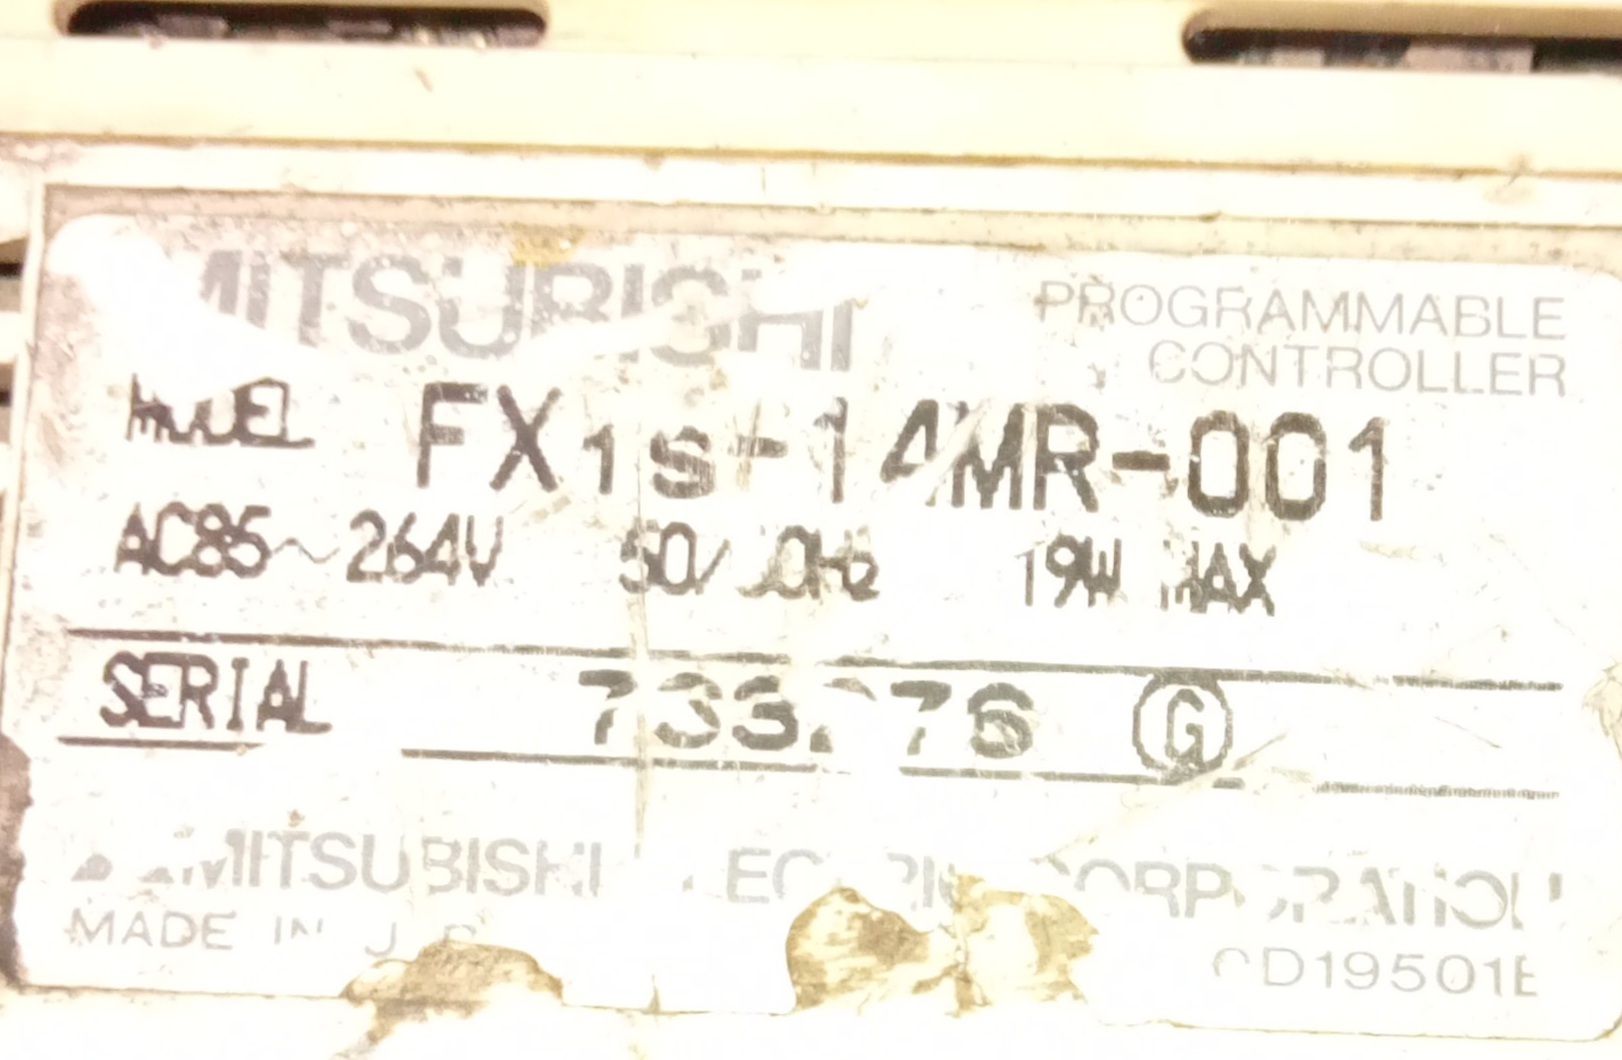 MITSUBISHI PROGRAMMABLE CONTROLLER FX1S-14MR-001